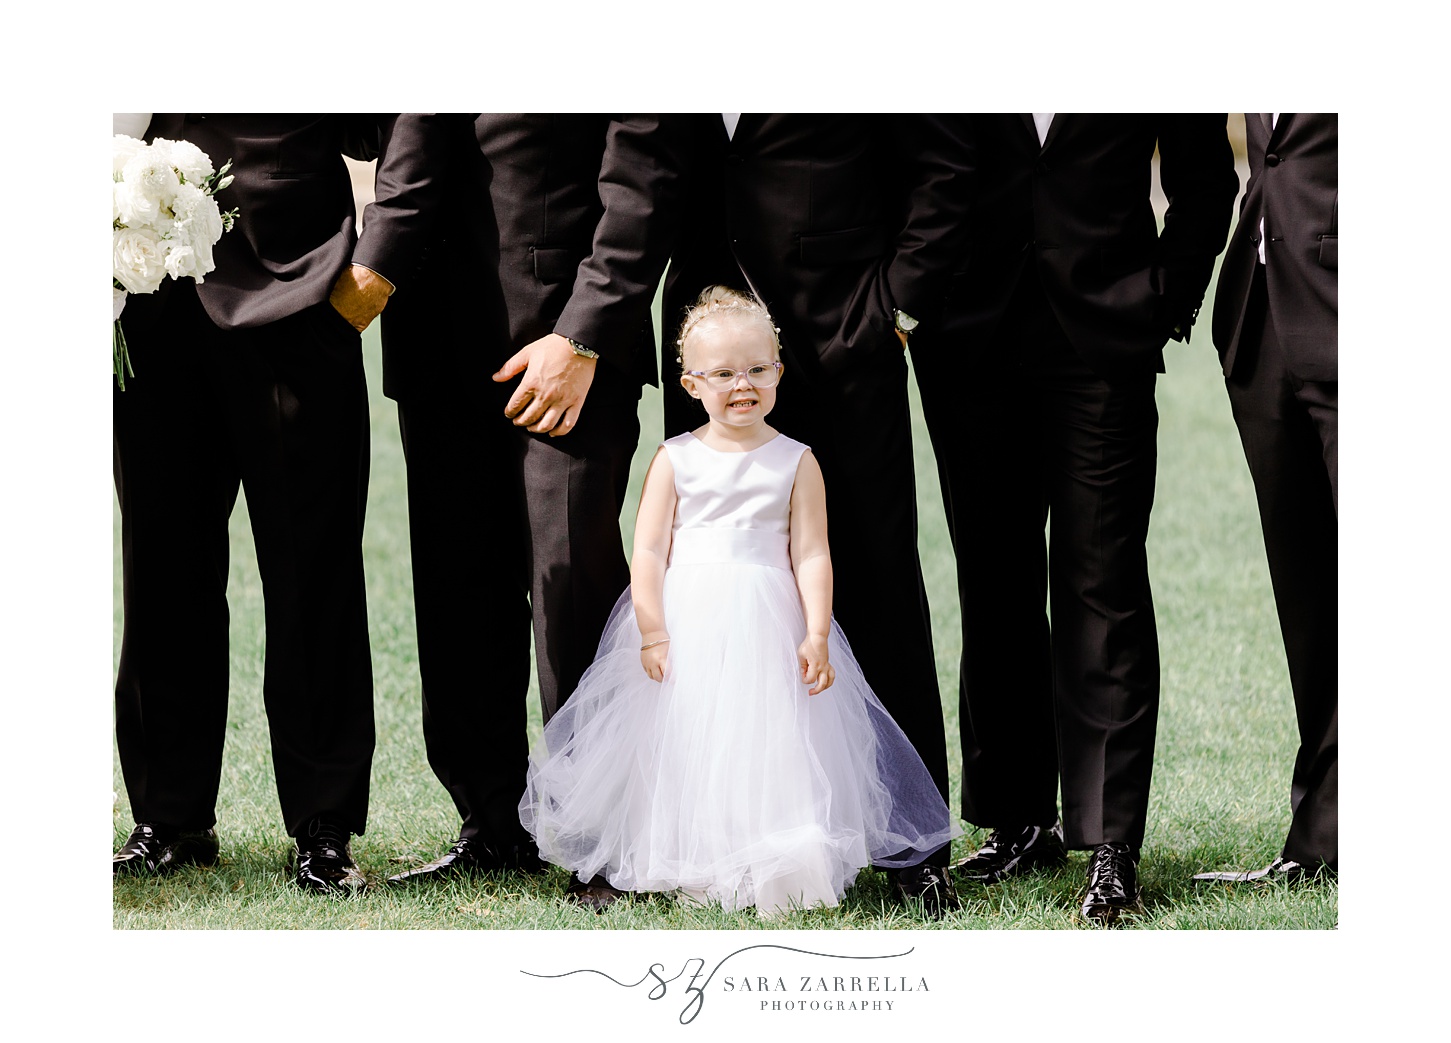 flower girl in white gown smiles in front of groomsmen